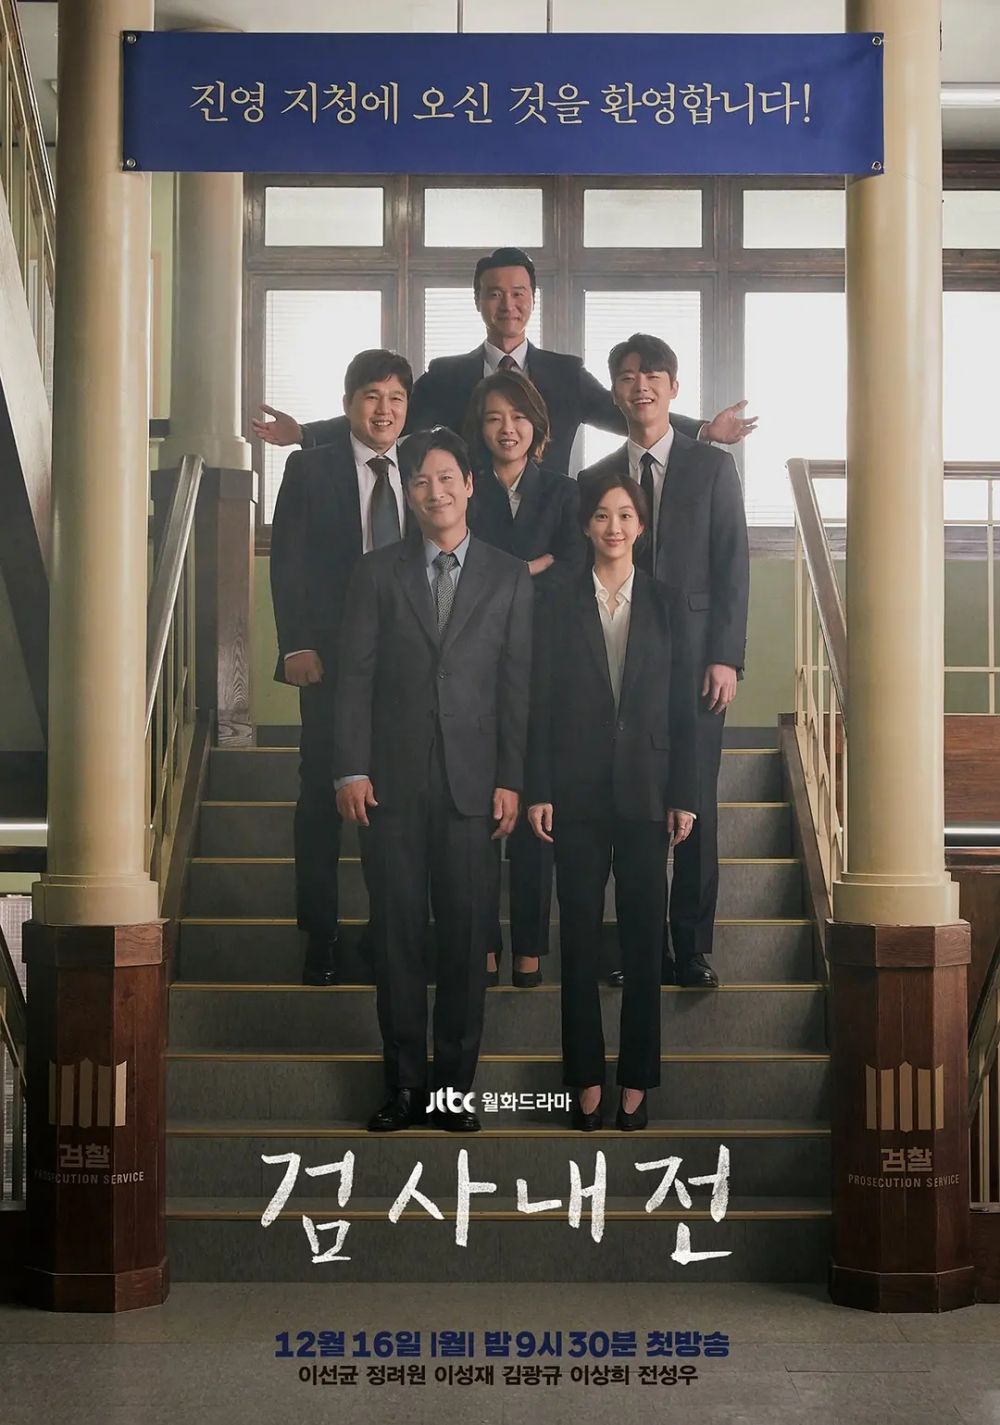 11 Drama Korea tentang hukum, Juvenile Justice cerita pengadilan anak